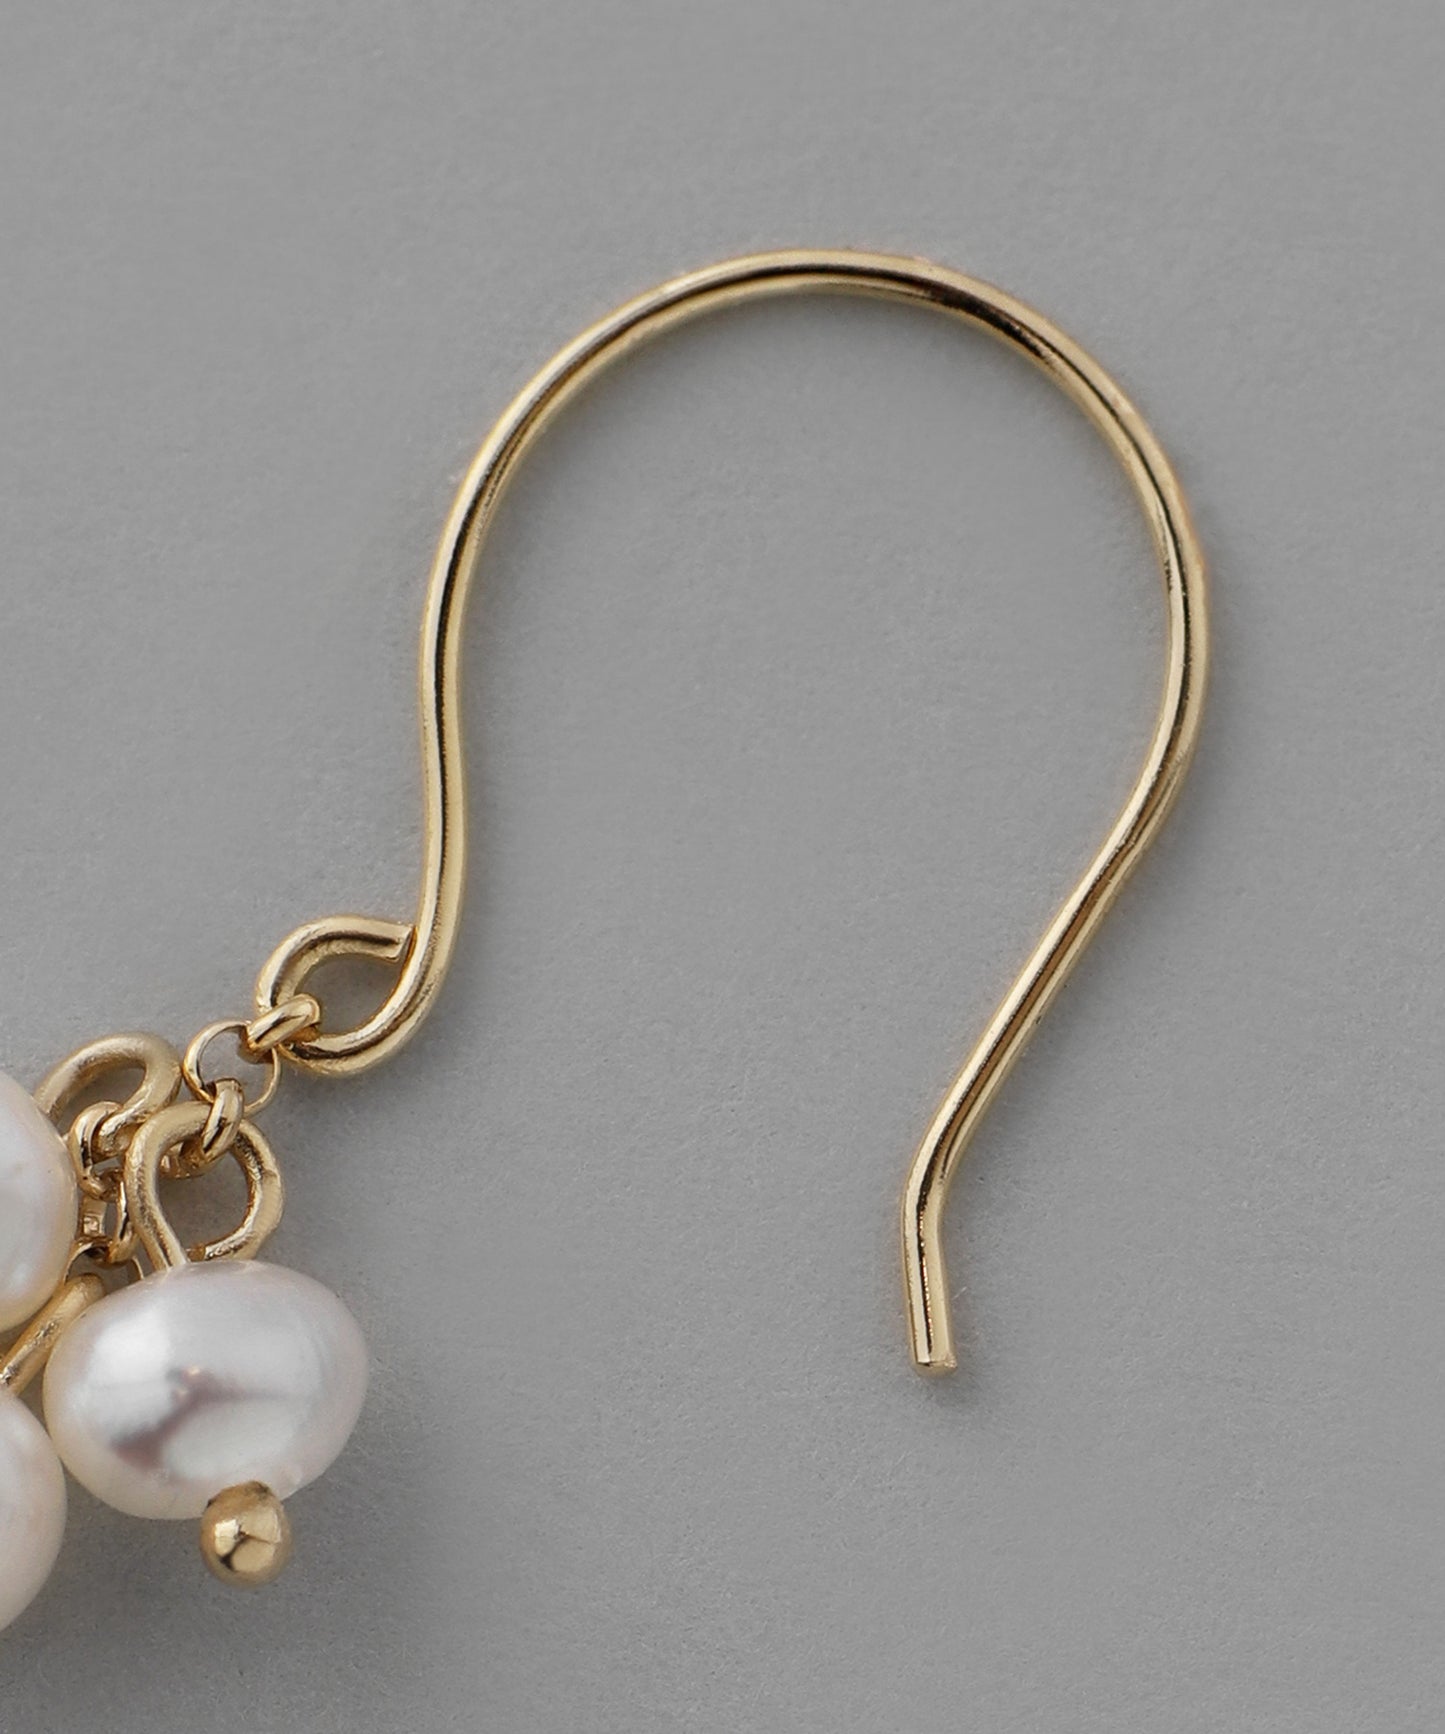 Freshwater Pearl Hook Earrings [10K]